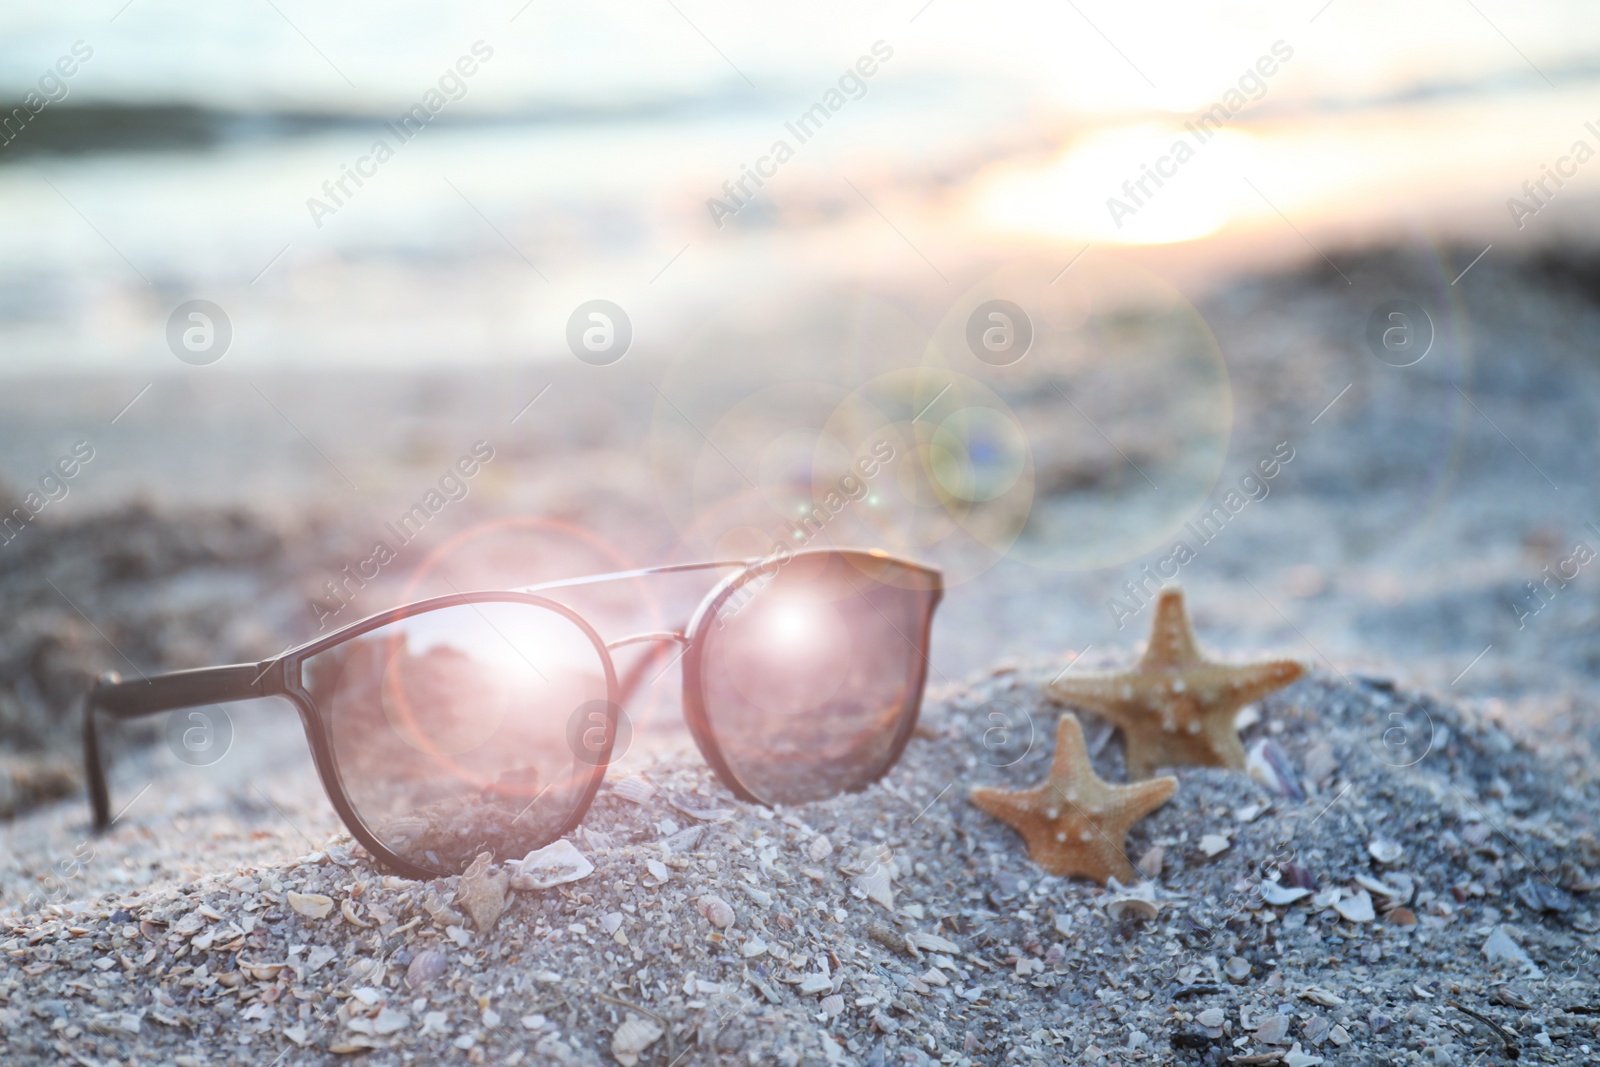 Photo of Stylish sunglasses and starfishes on sandy beach at sunset